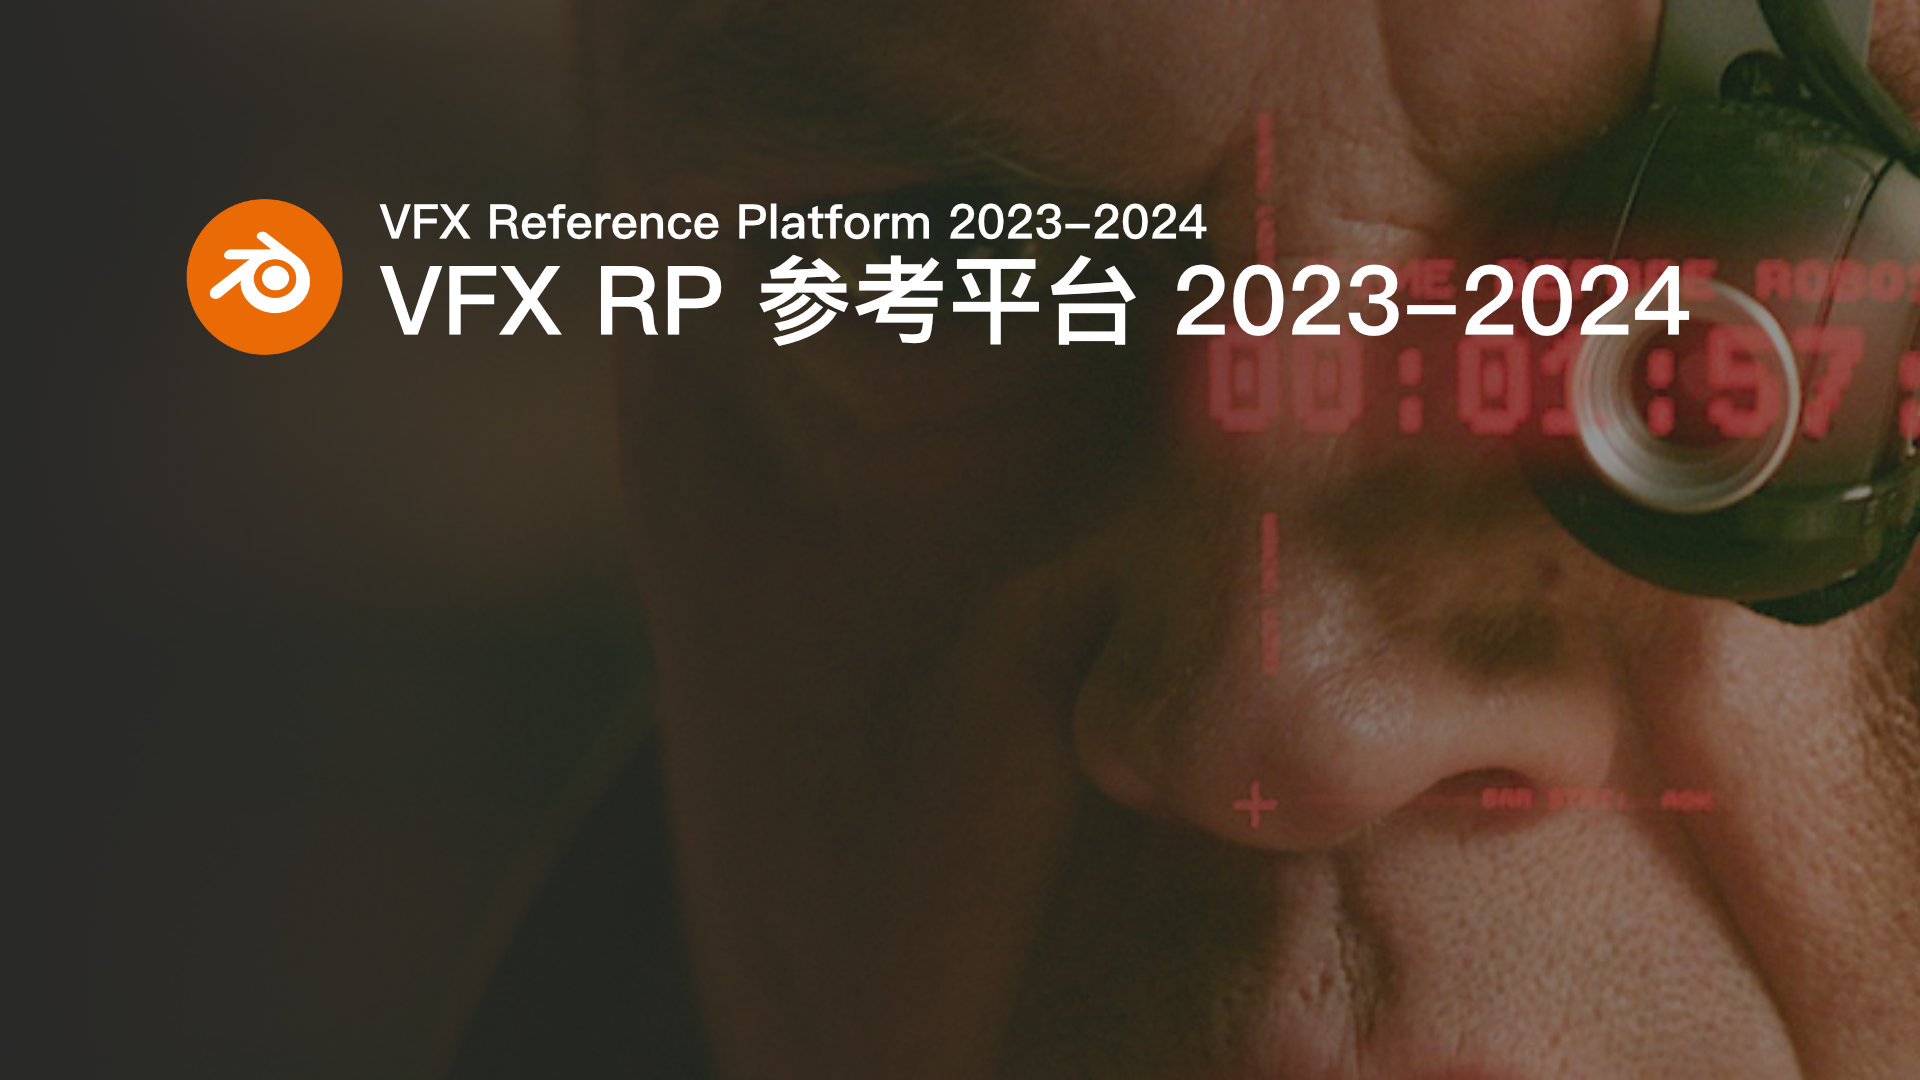 VFX Reference Platform 2023-2024.jpg